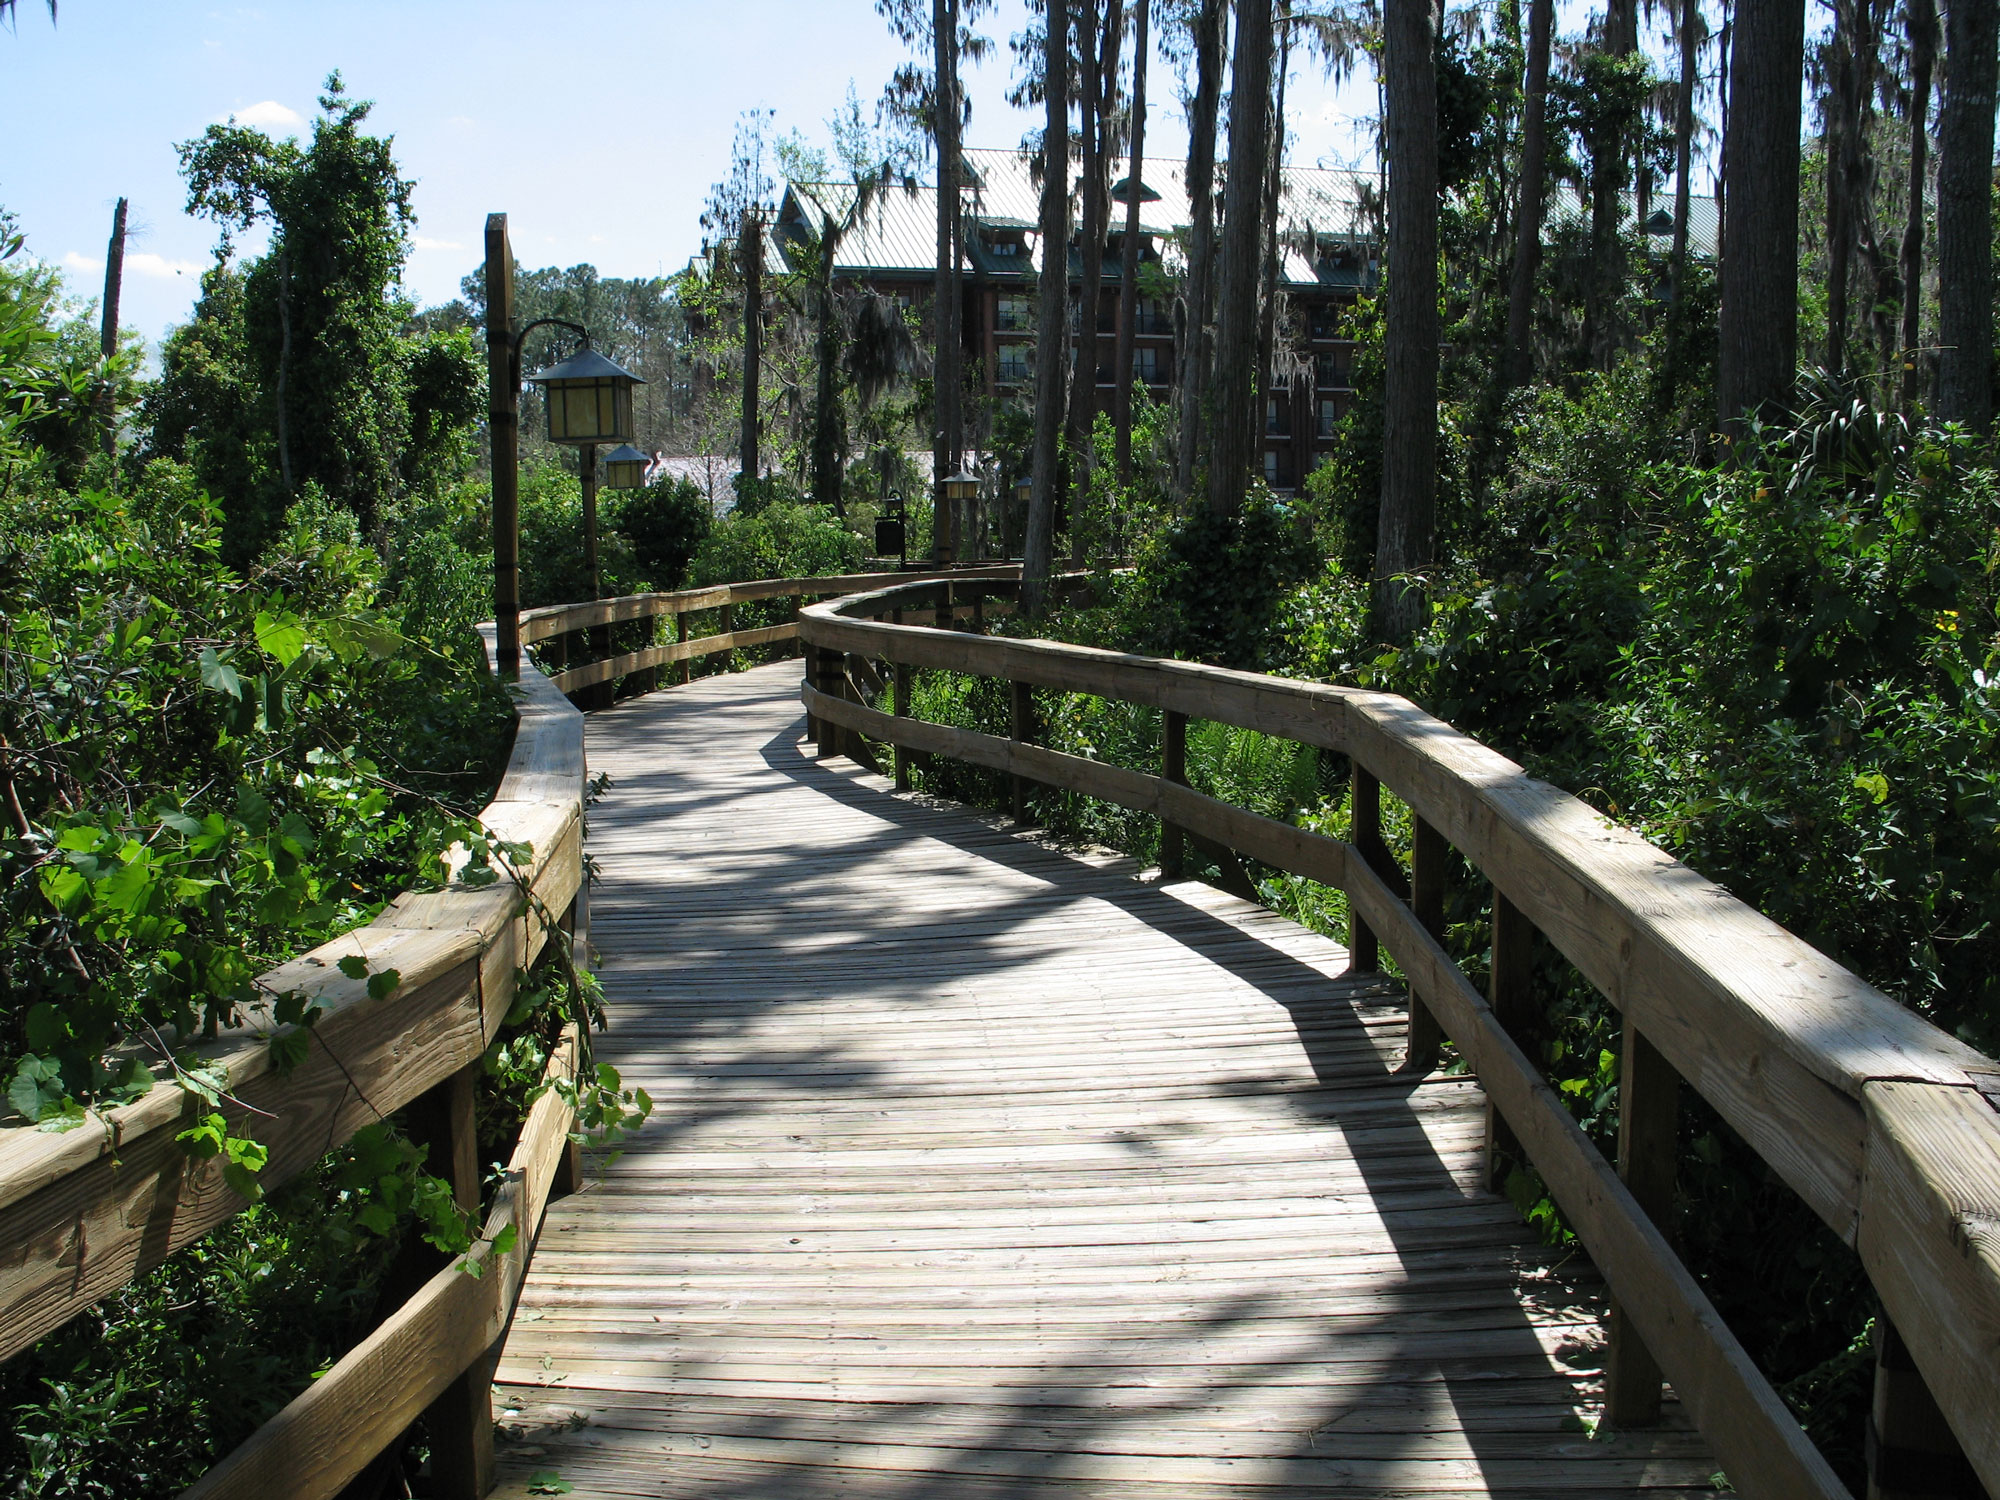 Wilderness Lodge walkway from dock to resort